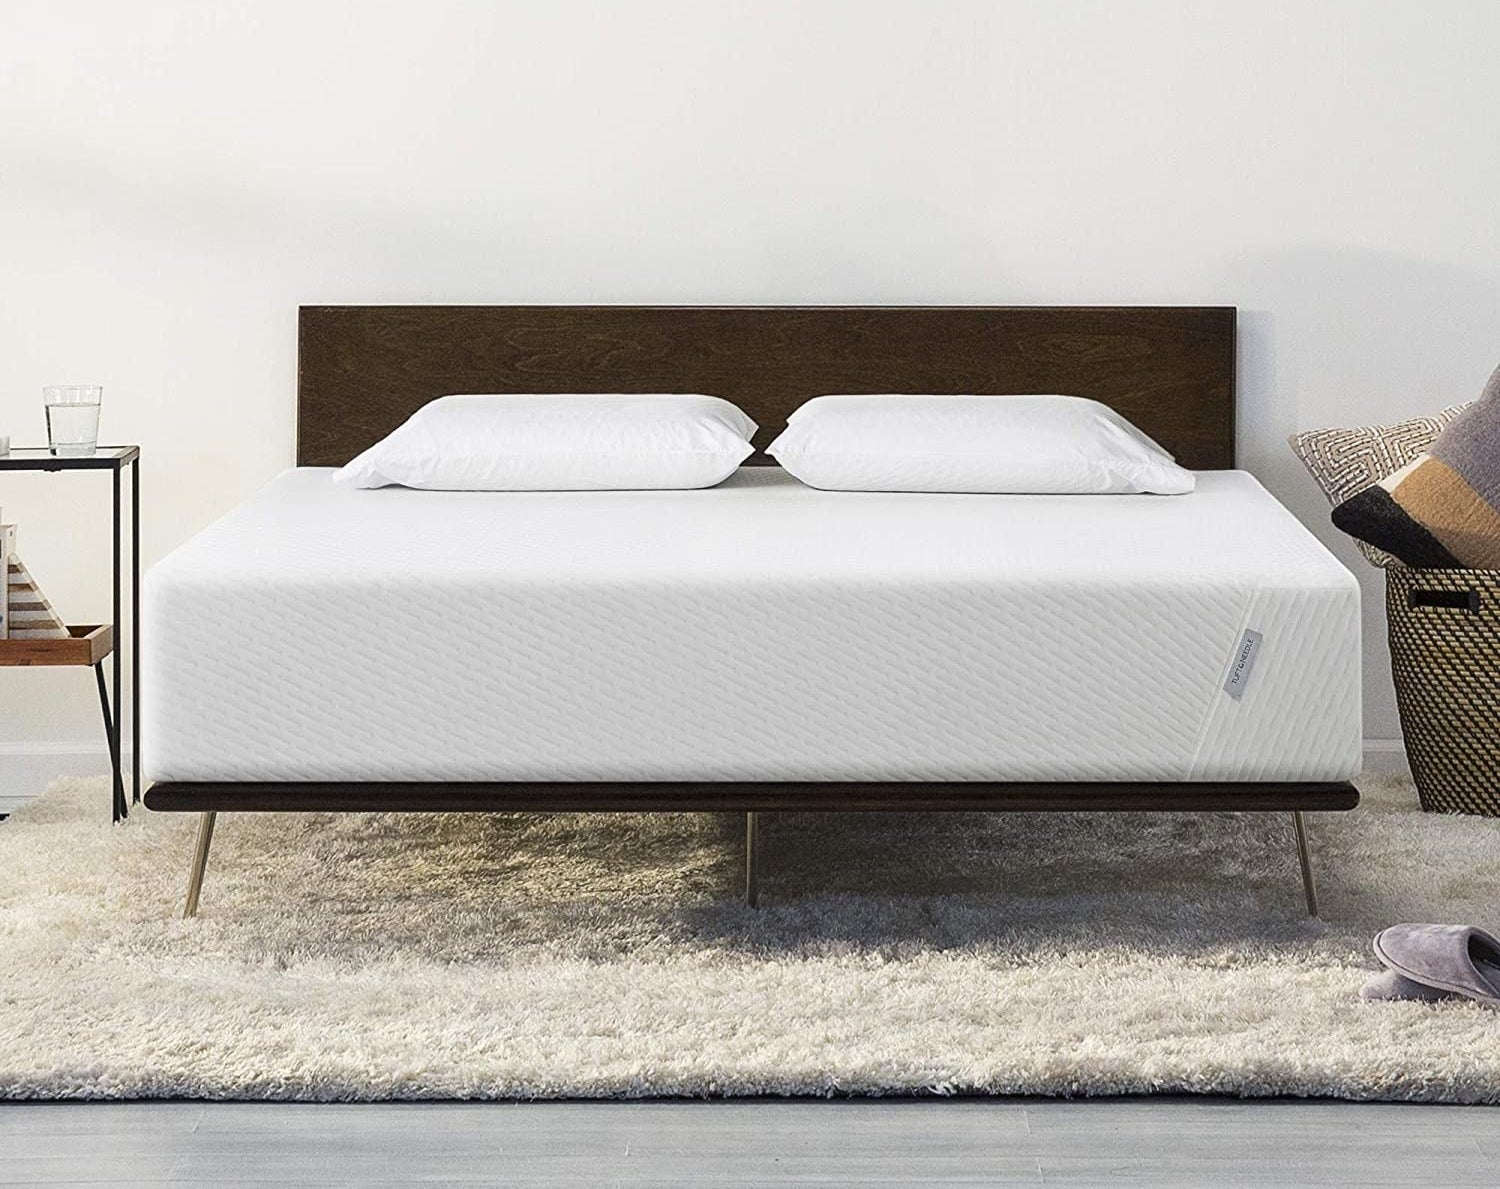 The 10-inch mattress